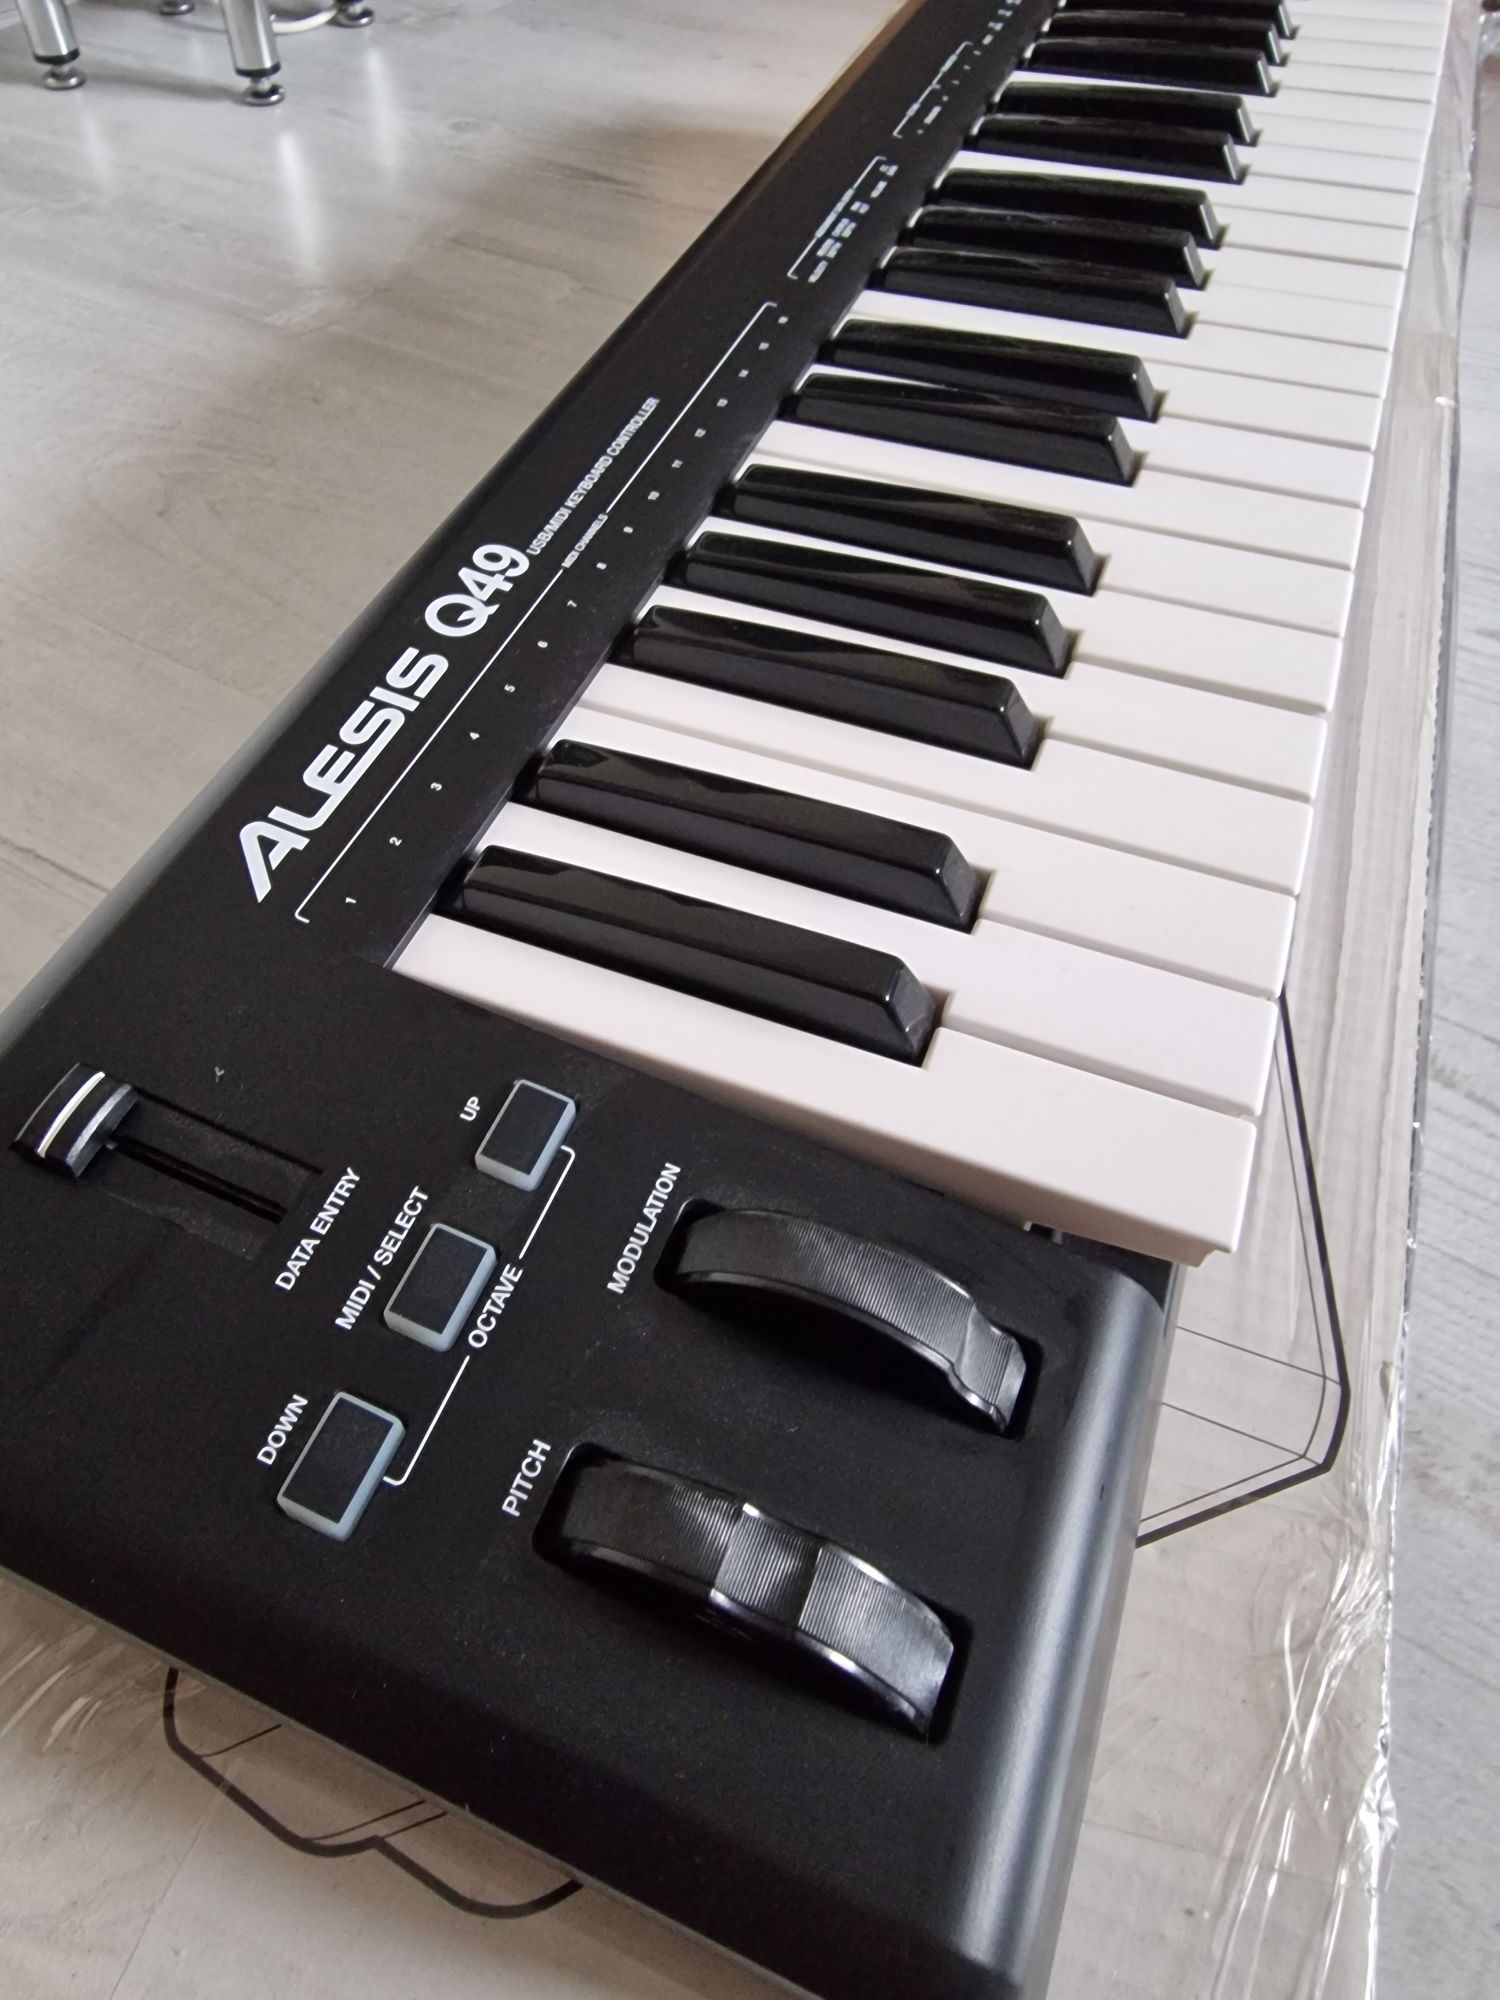 Alesis Q49 kontroler midi keyboard pianino